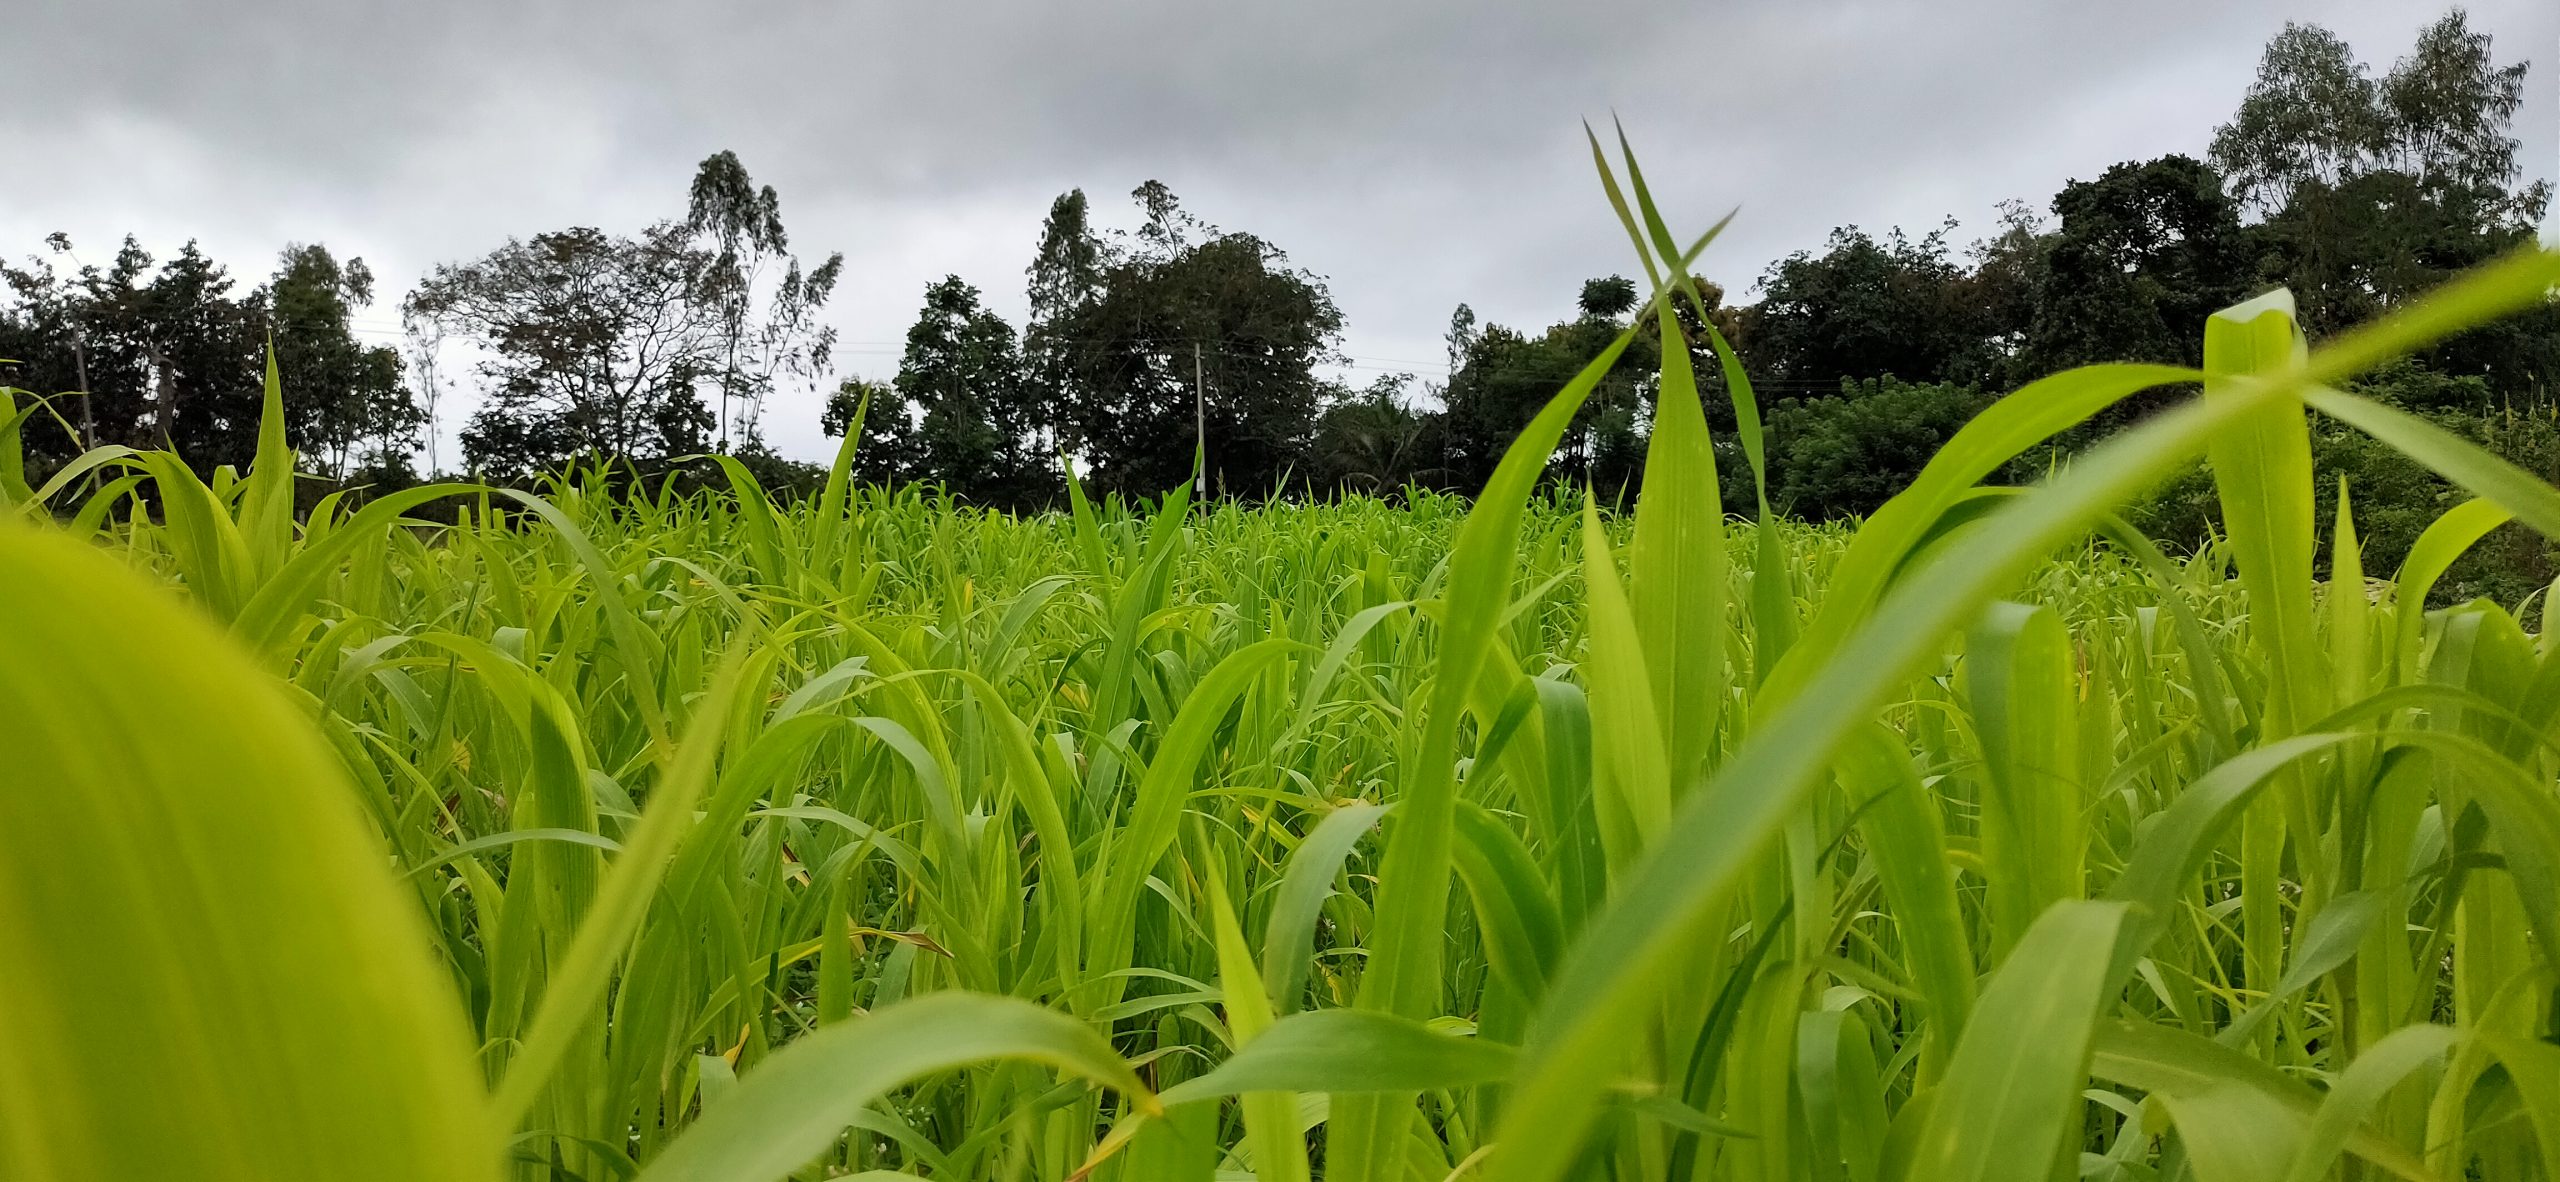 Grass in a field